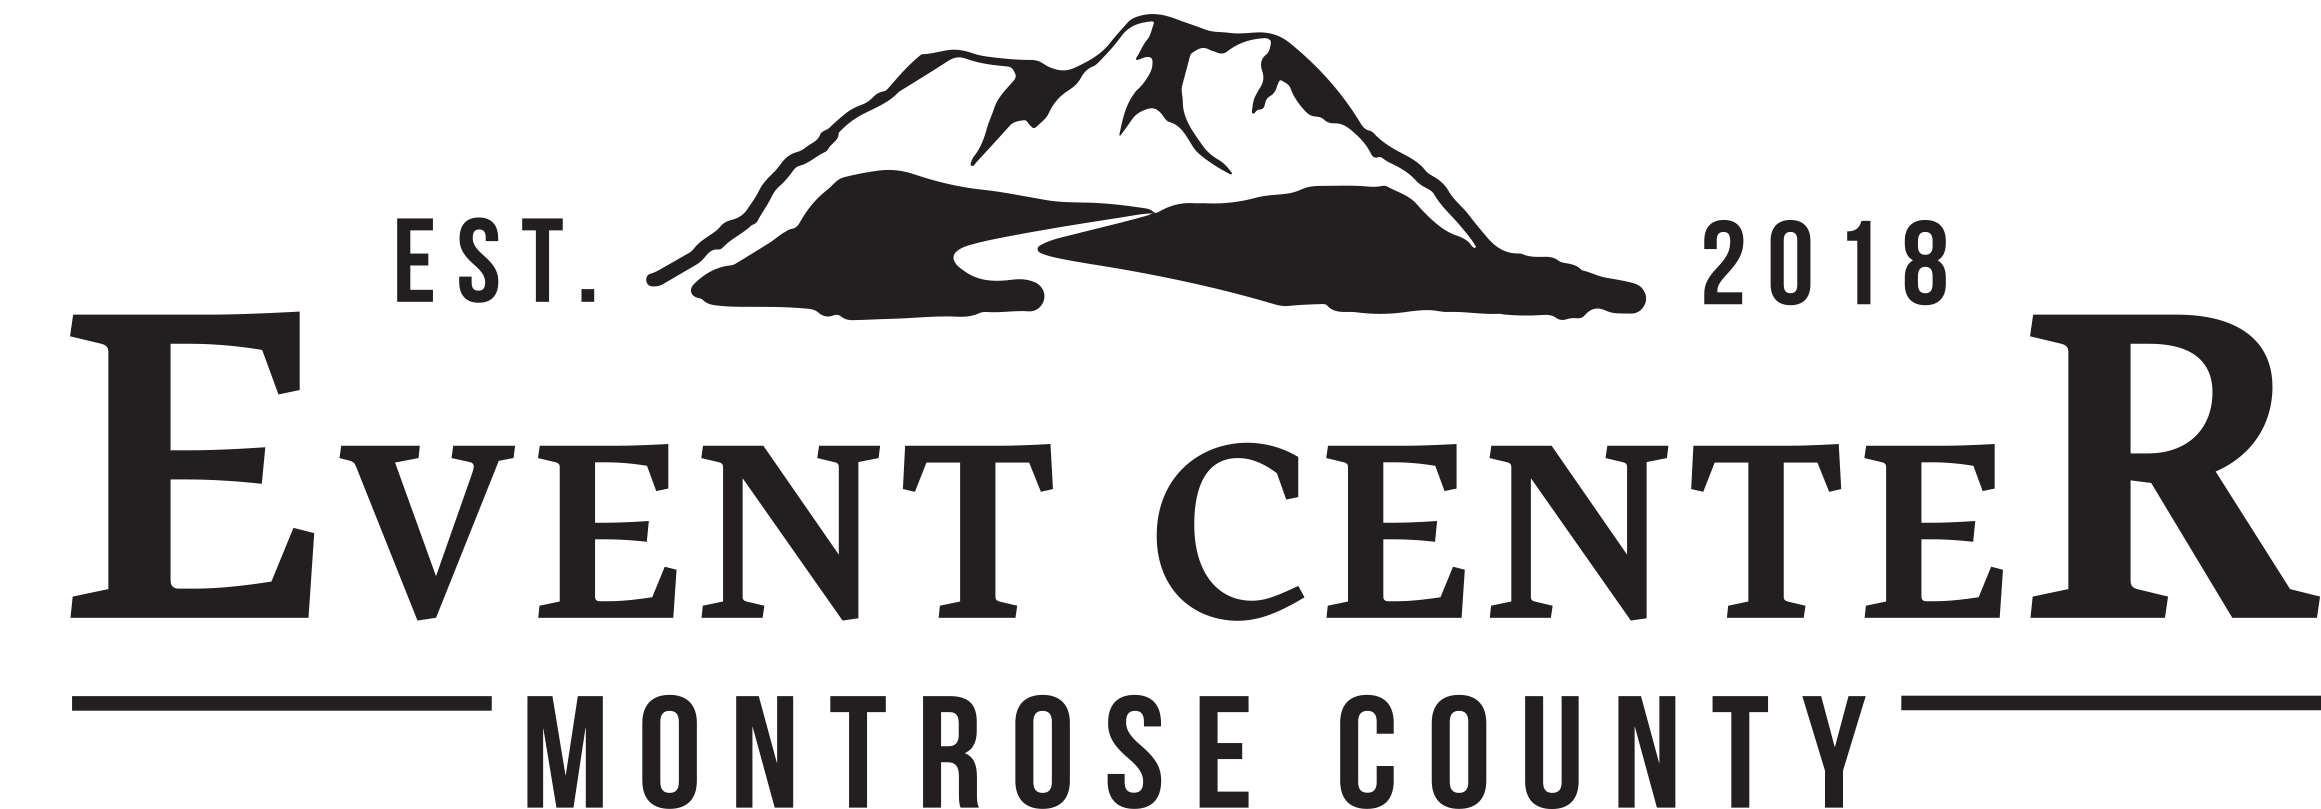 Montrose County Event Center